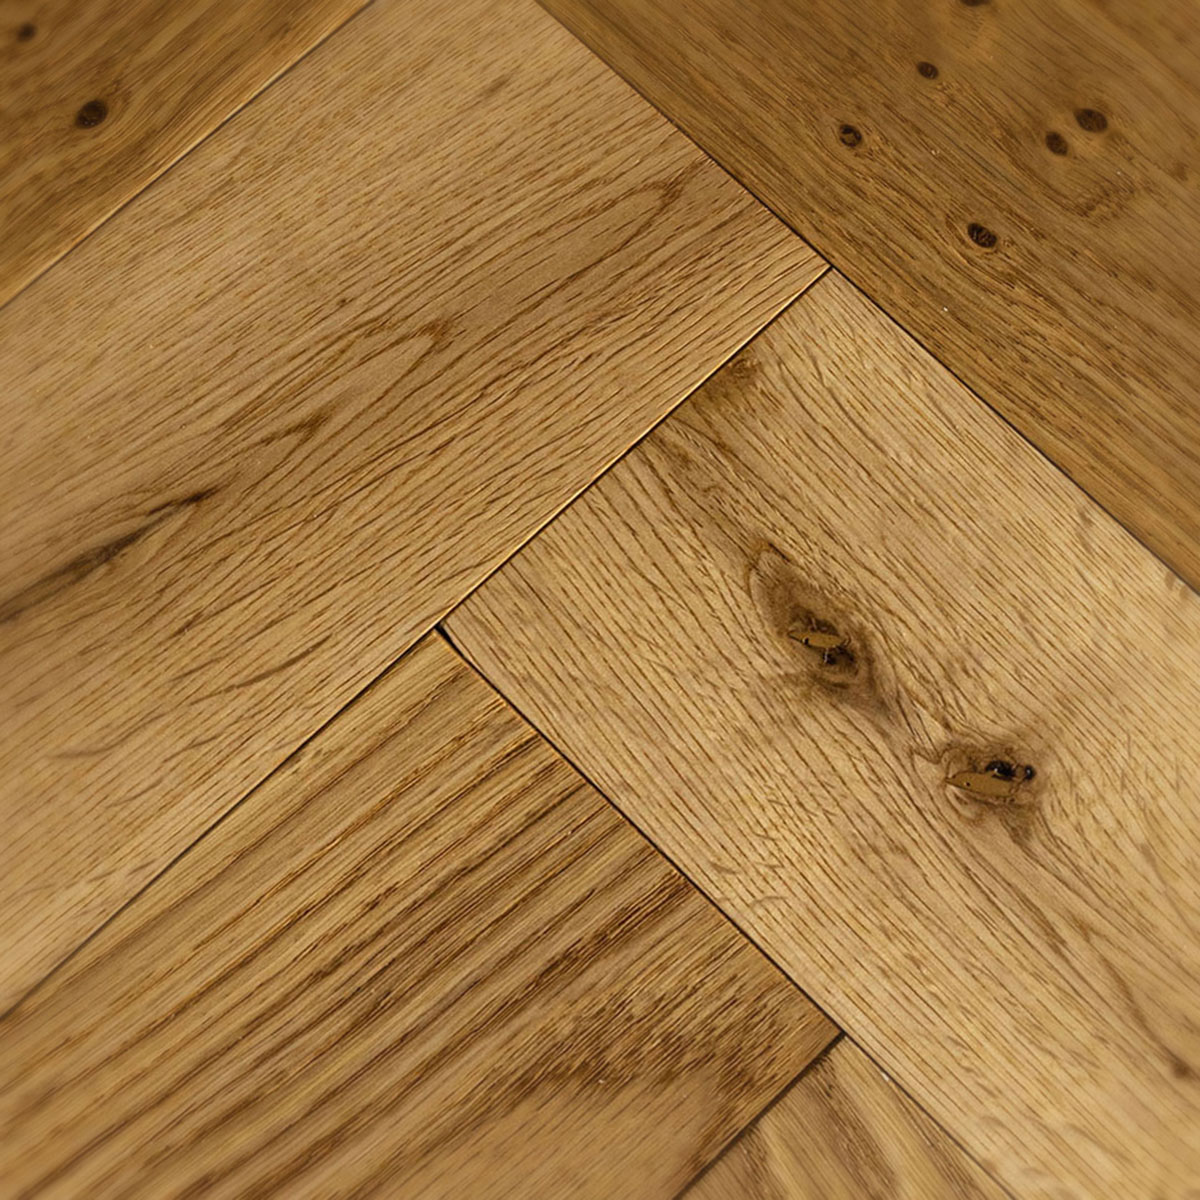 Darsham Place - Brushed Oiled Herringbone Wood Floor 